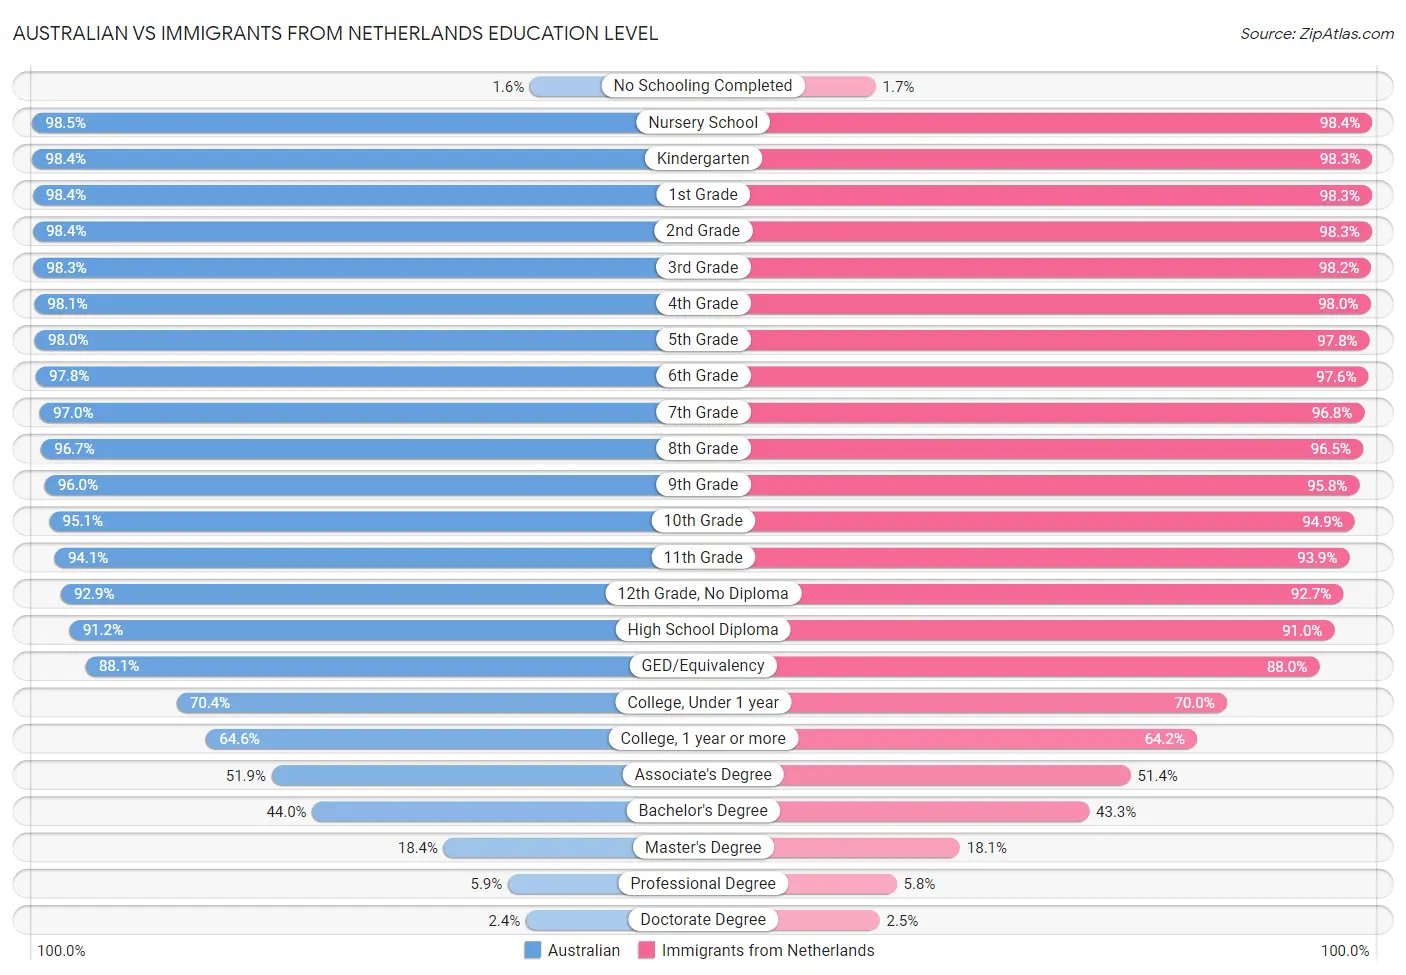 Australian vs Immigrants from Netherlands Education Level